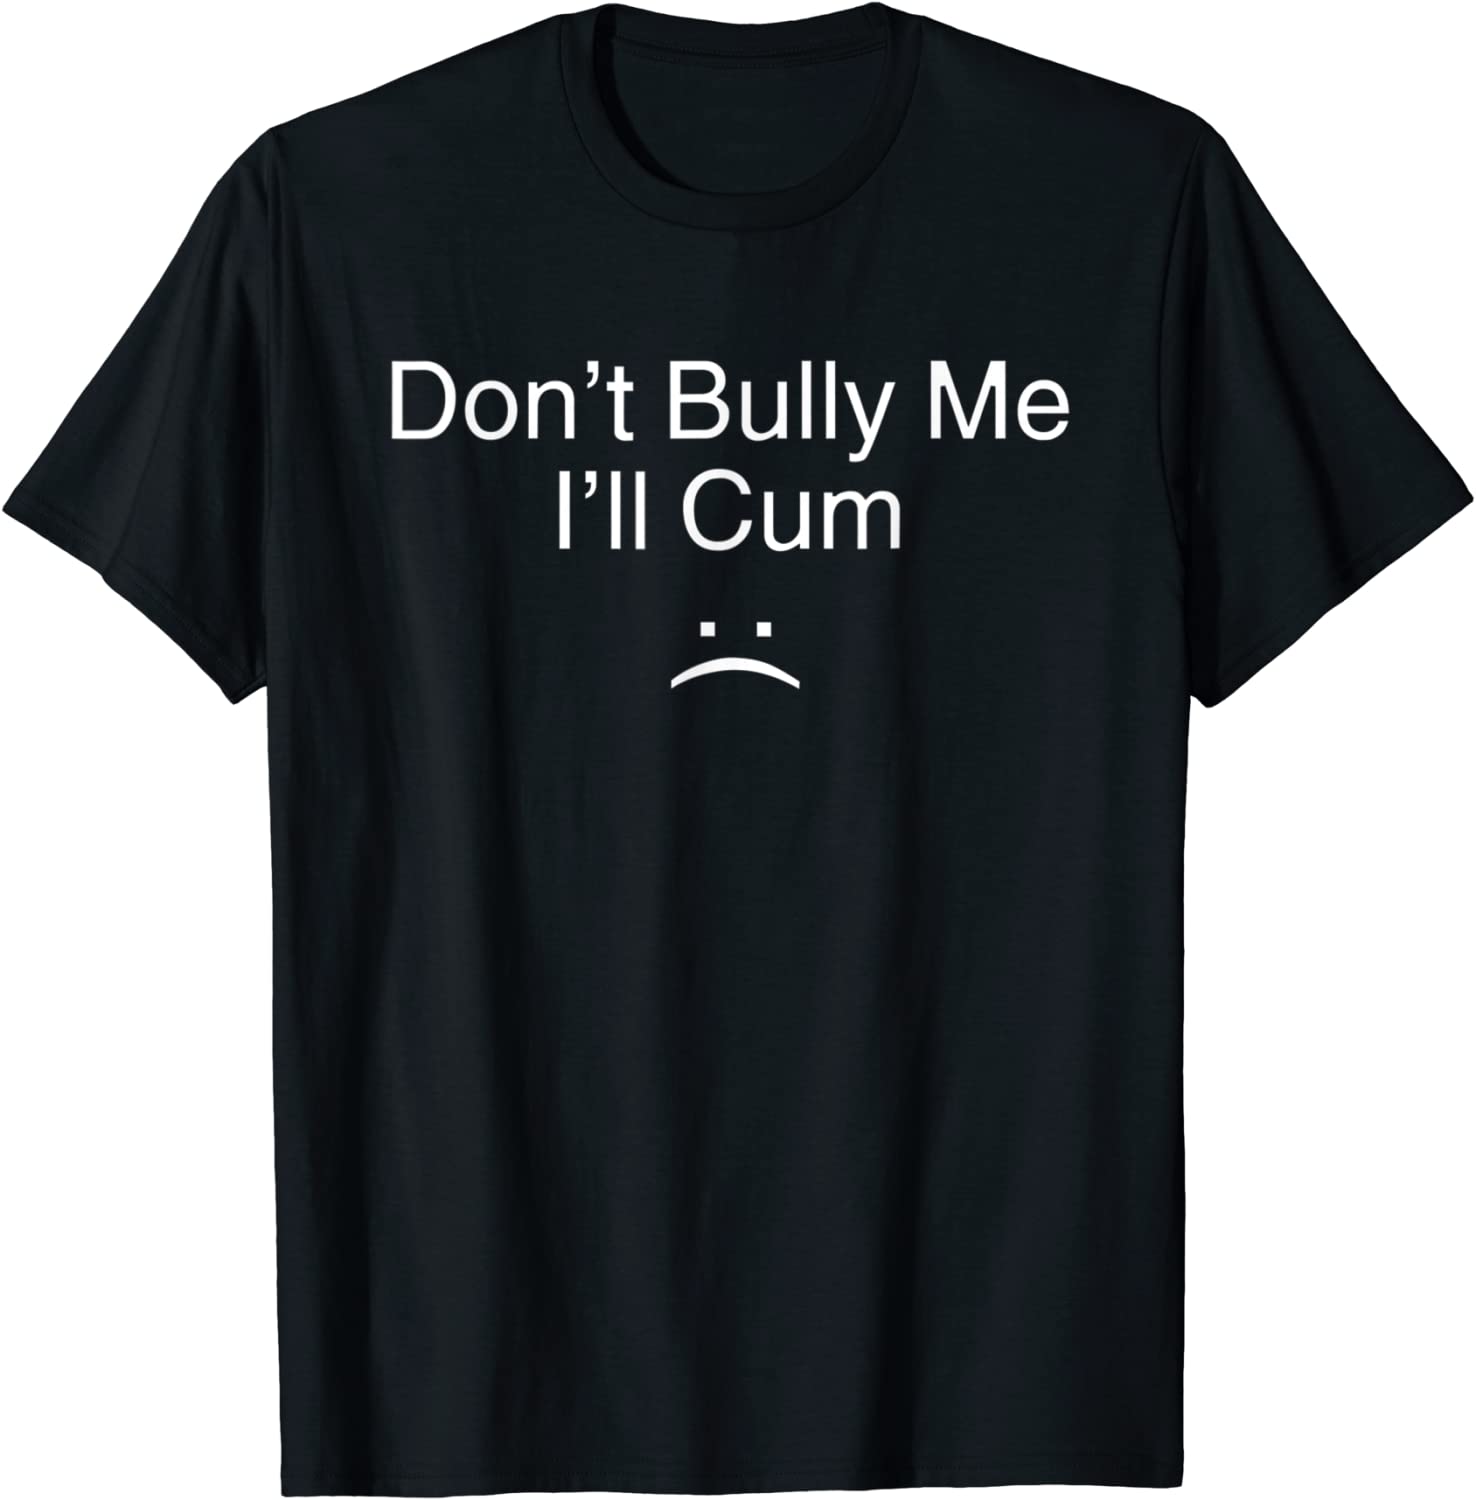 Don't Bully Me I'll Cum (62)